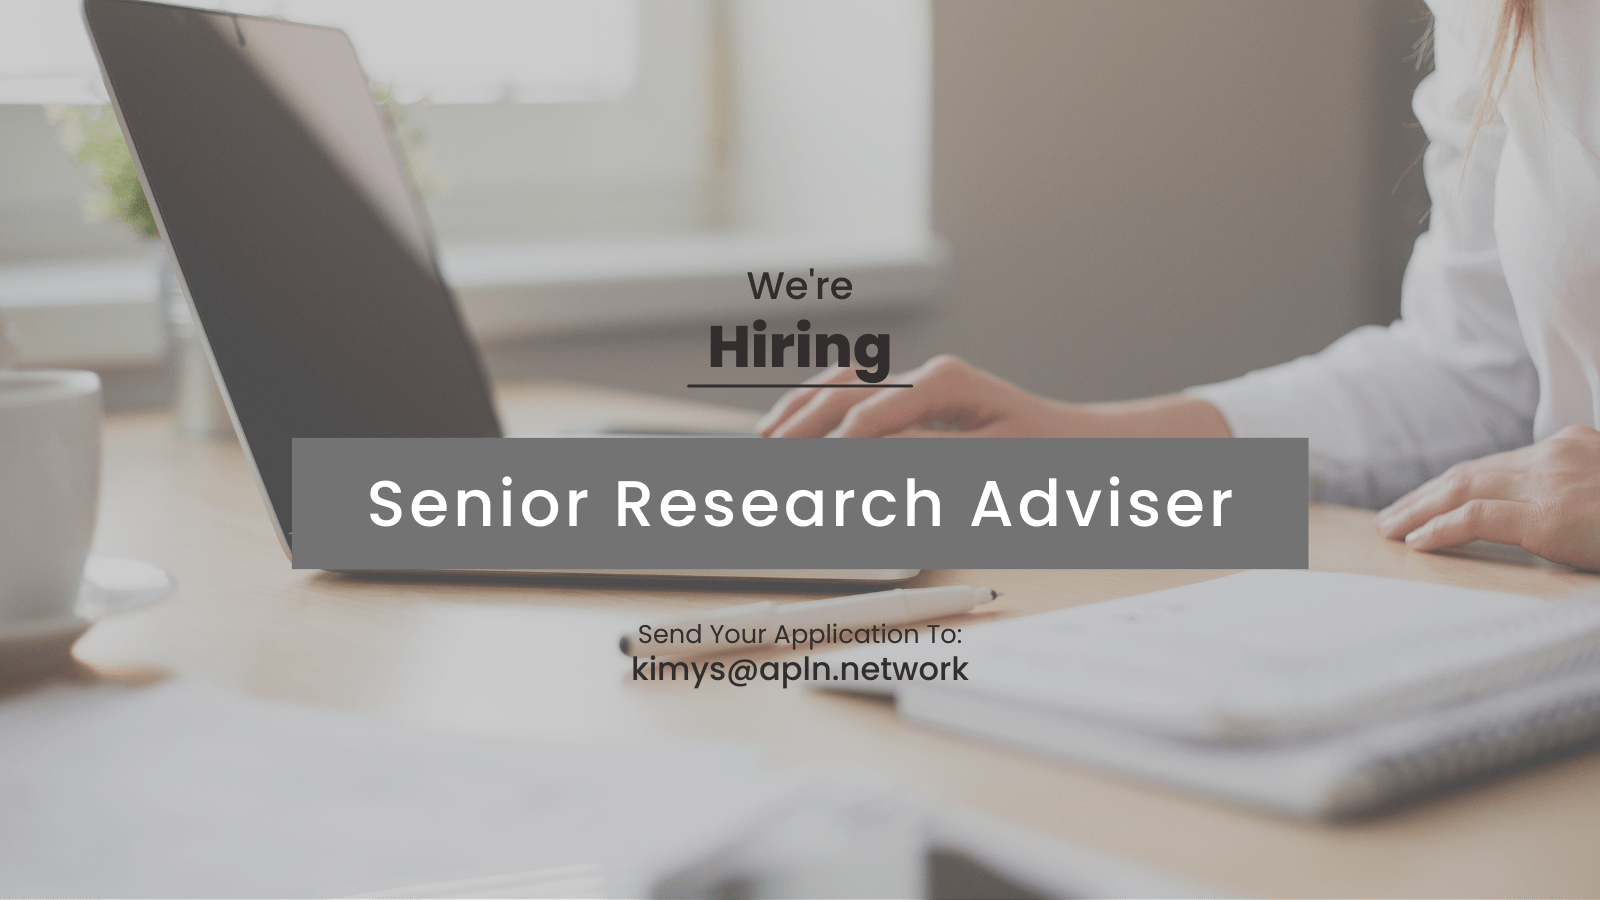 [Job Advert] Senior Research Adviser